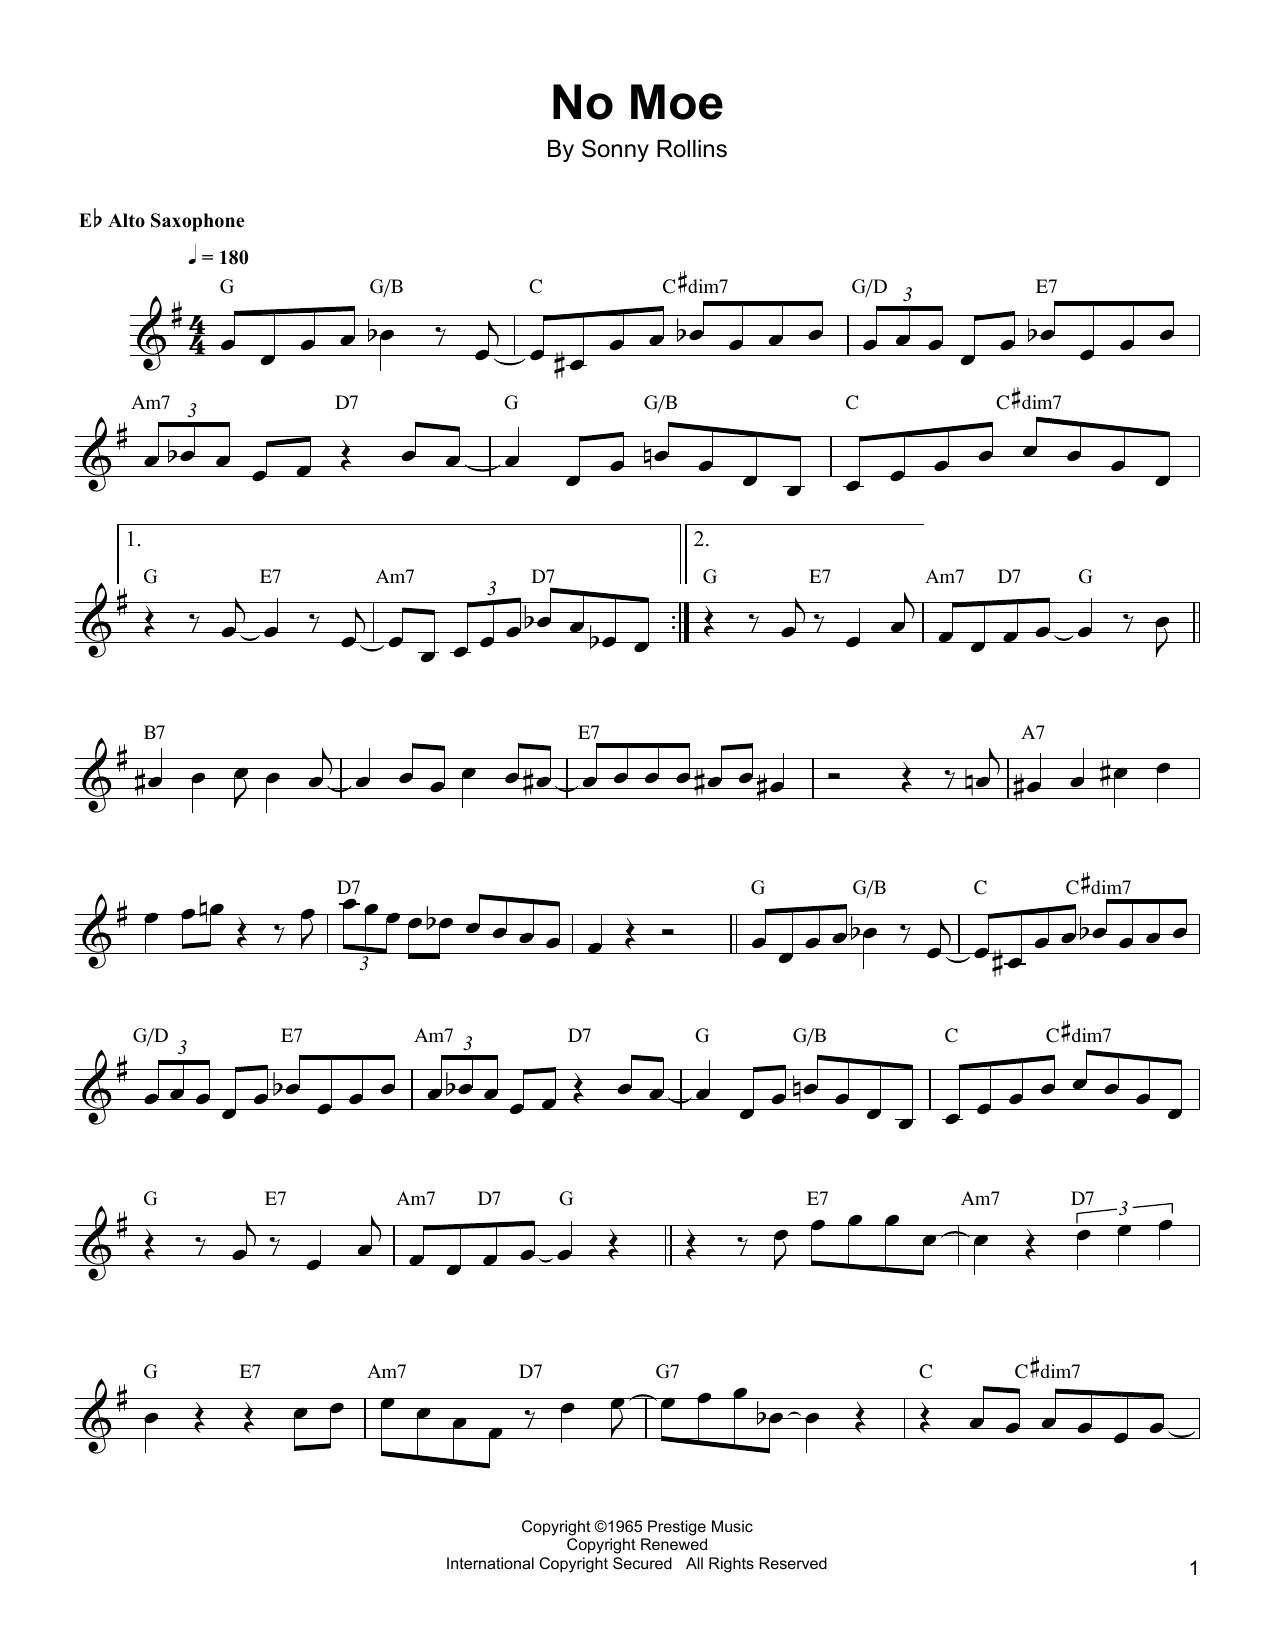 Bud Shank No Moe Sheet Music Notes & Chords for Alto Sax Transcription - Download or Print PDF